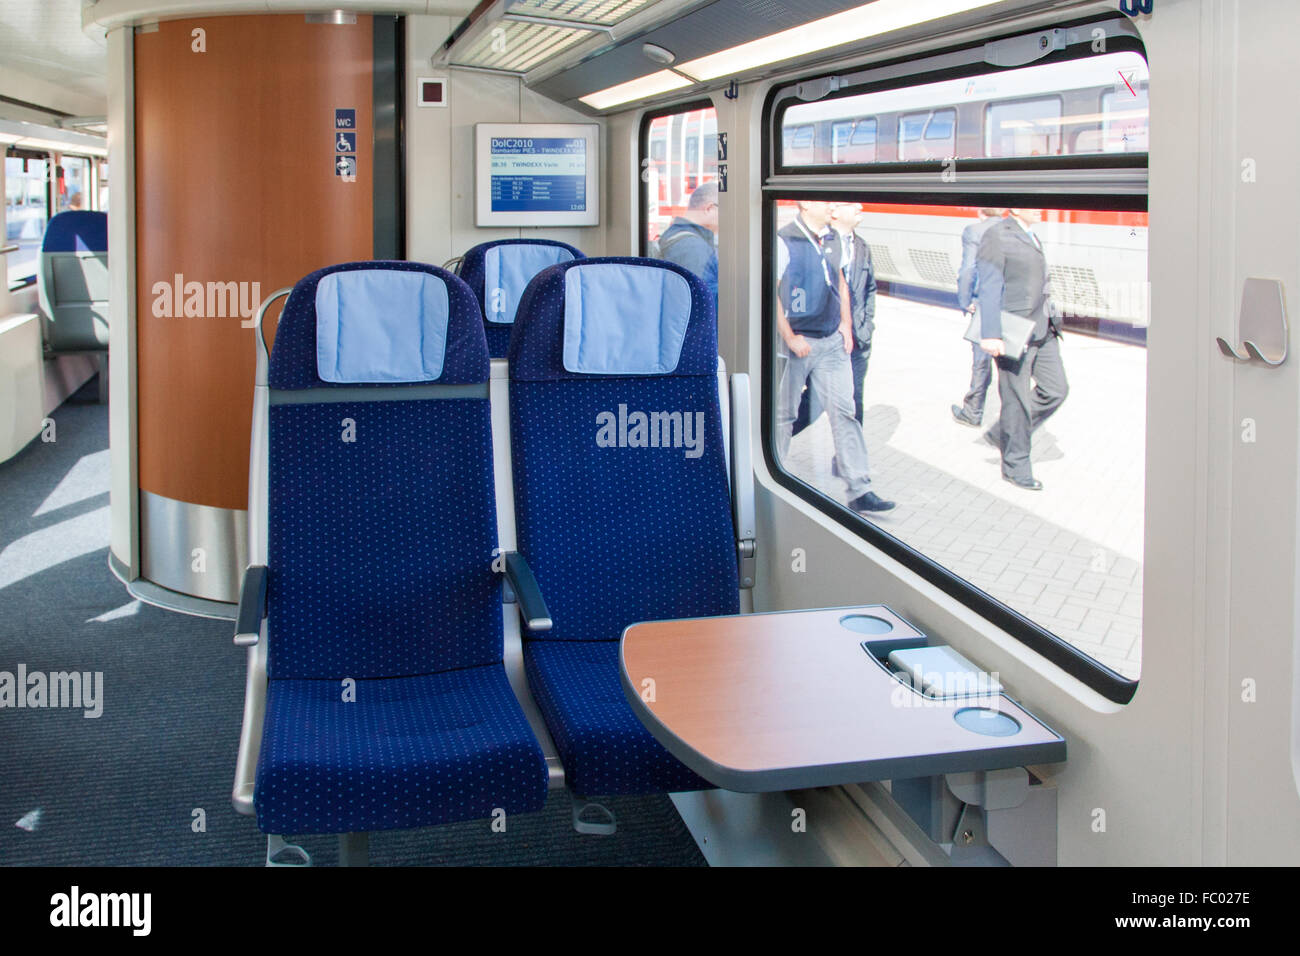 Intercity Double-Deck-Trains for Deutsche Bahn Stock Photo